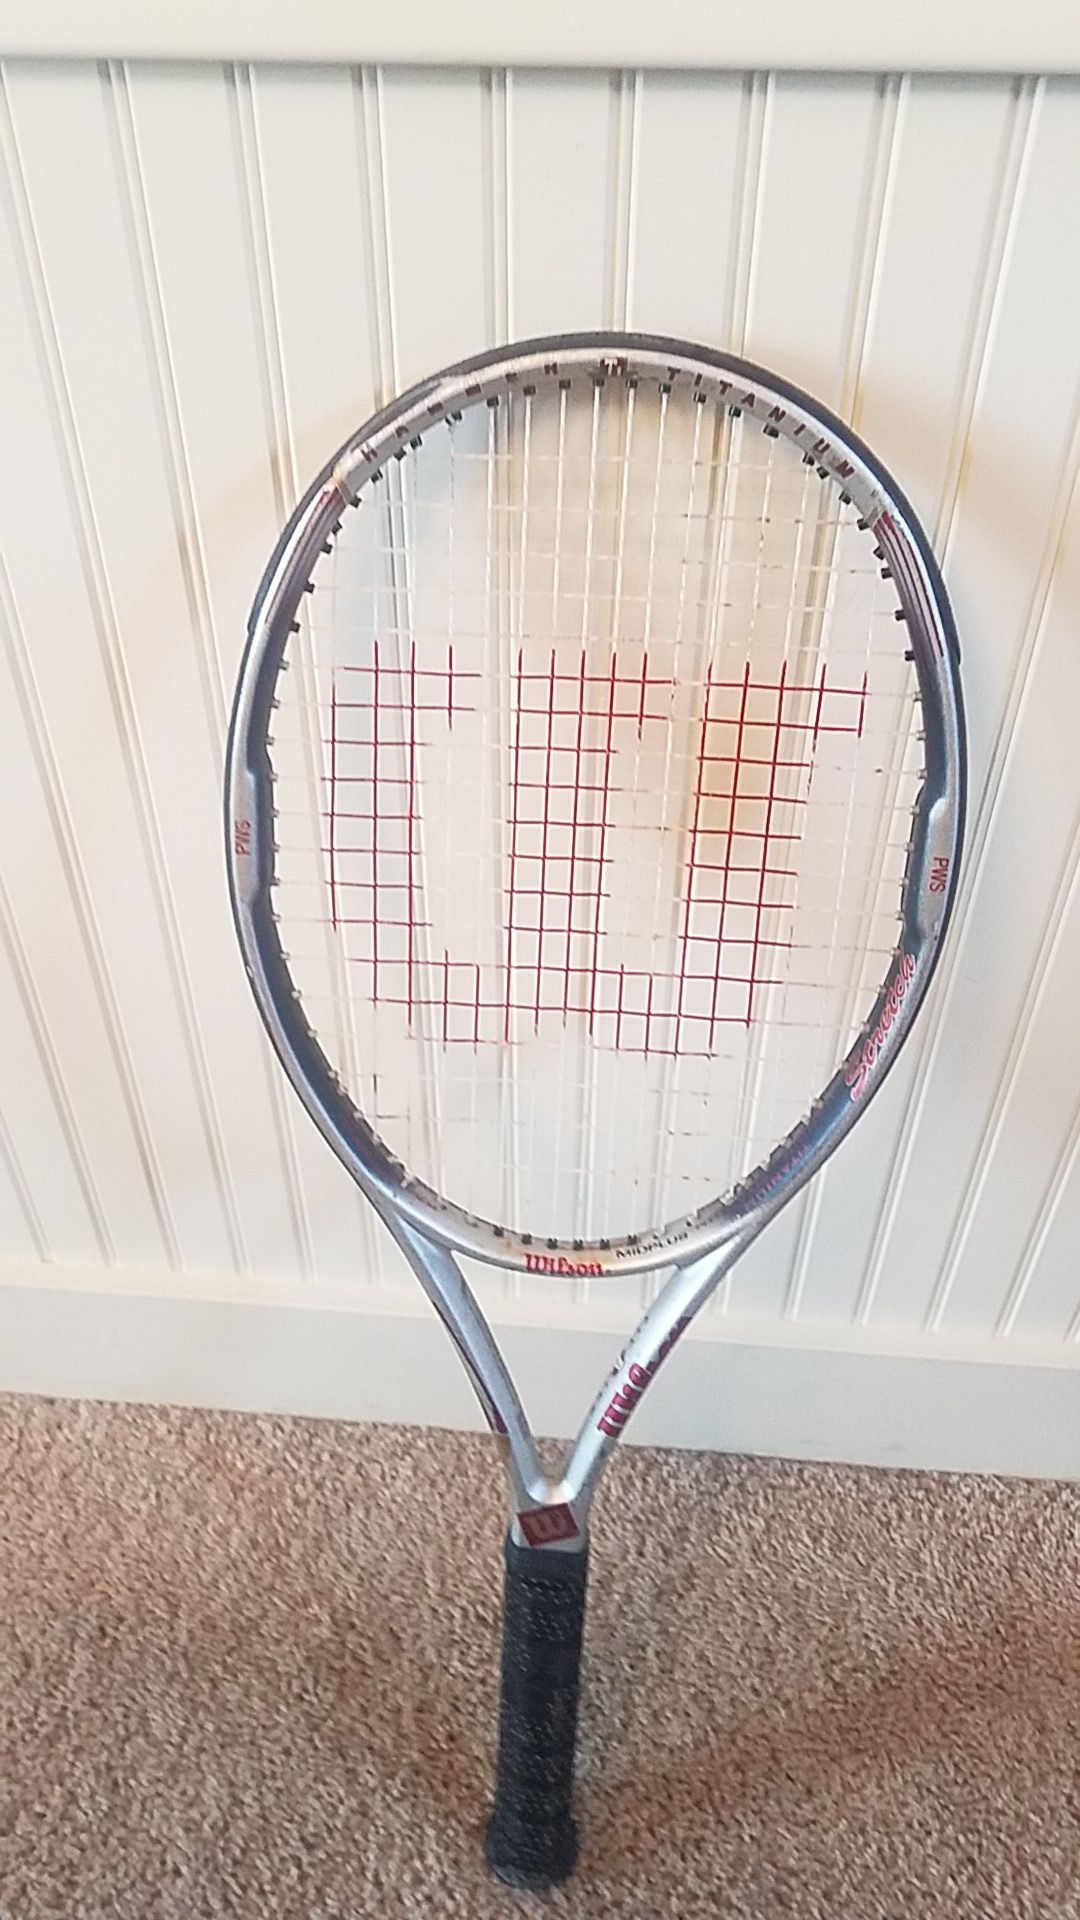 Wilson hammer tennis racket..